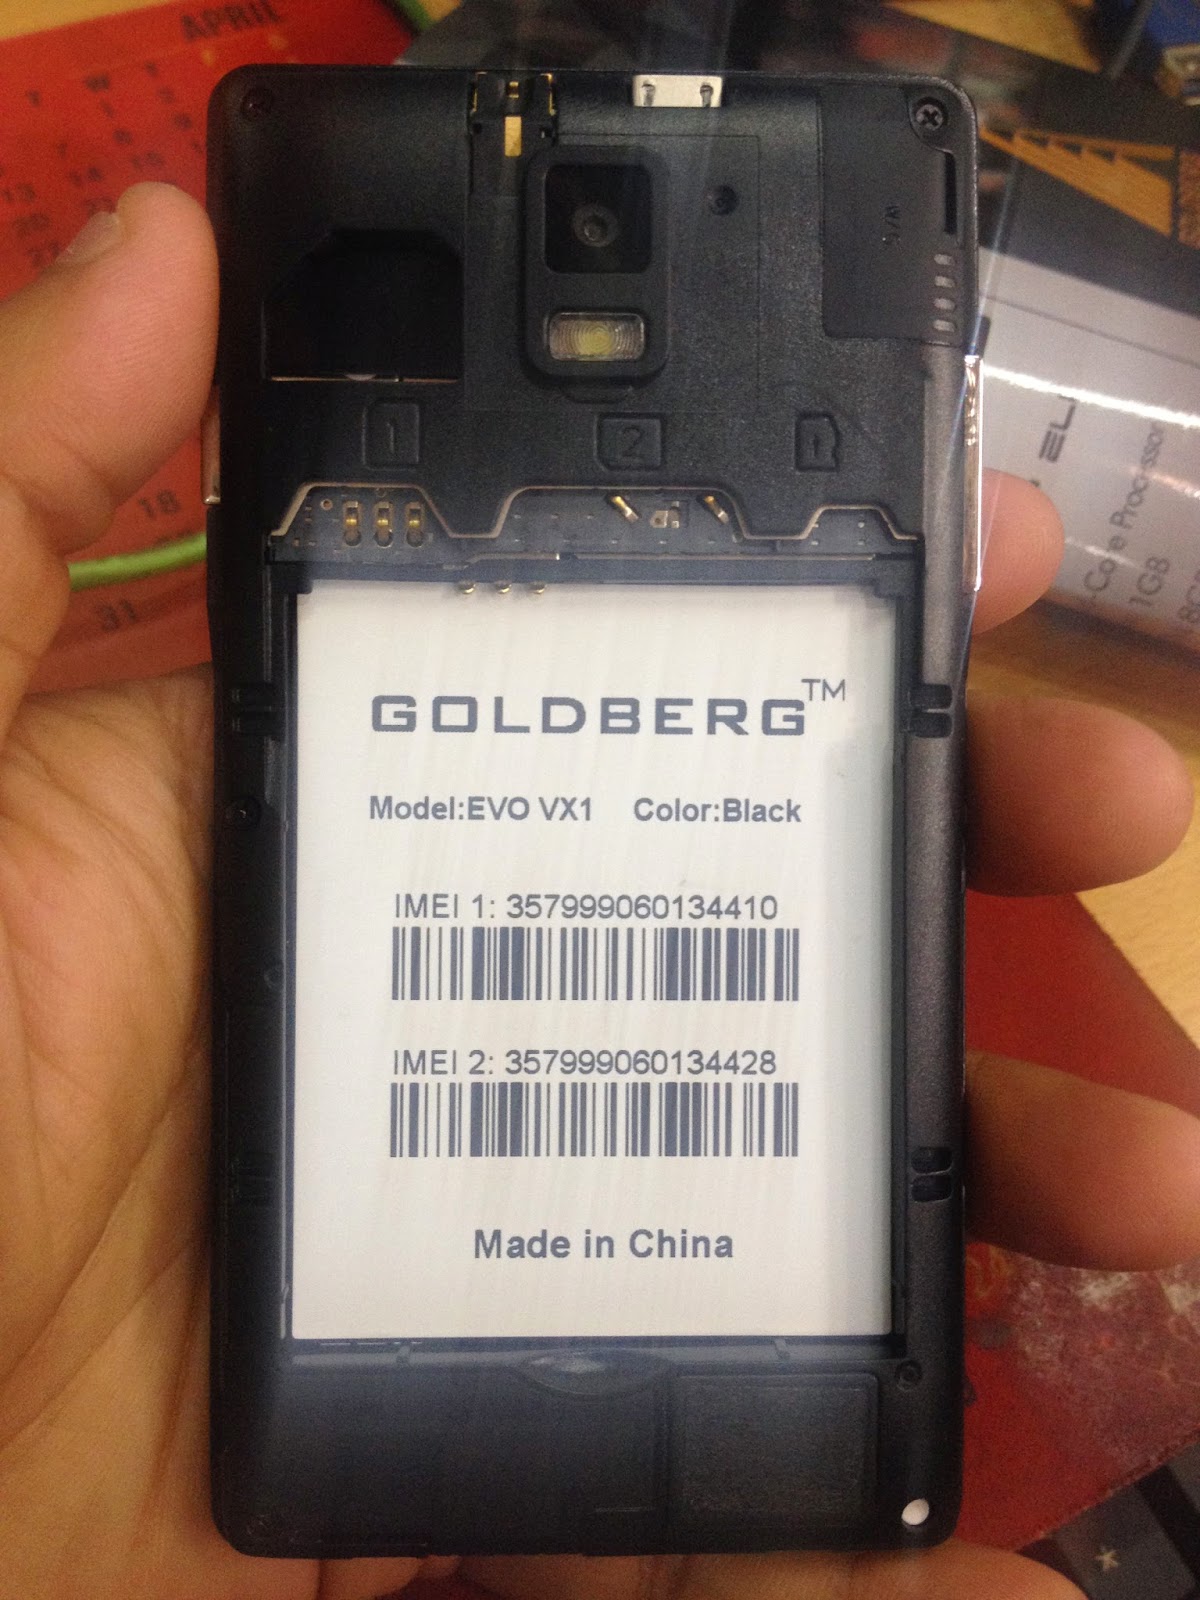 Image result for goldberg evo vx1 firmware